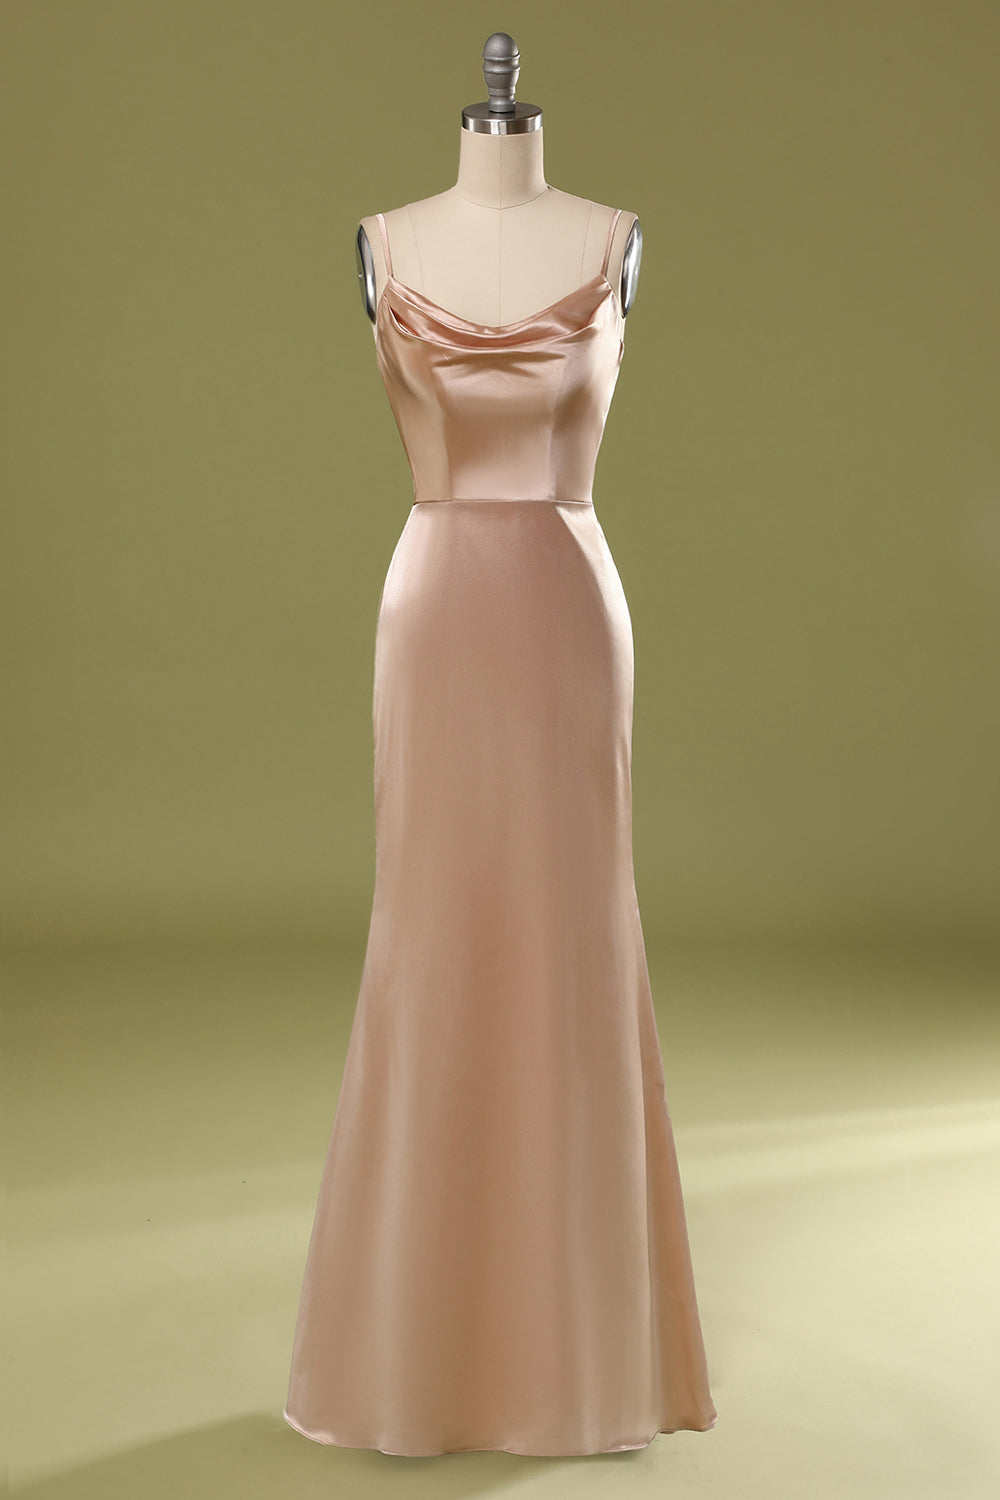 Dusty Pink Satin Prom Dress